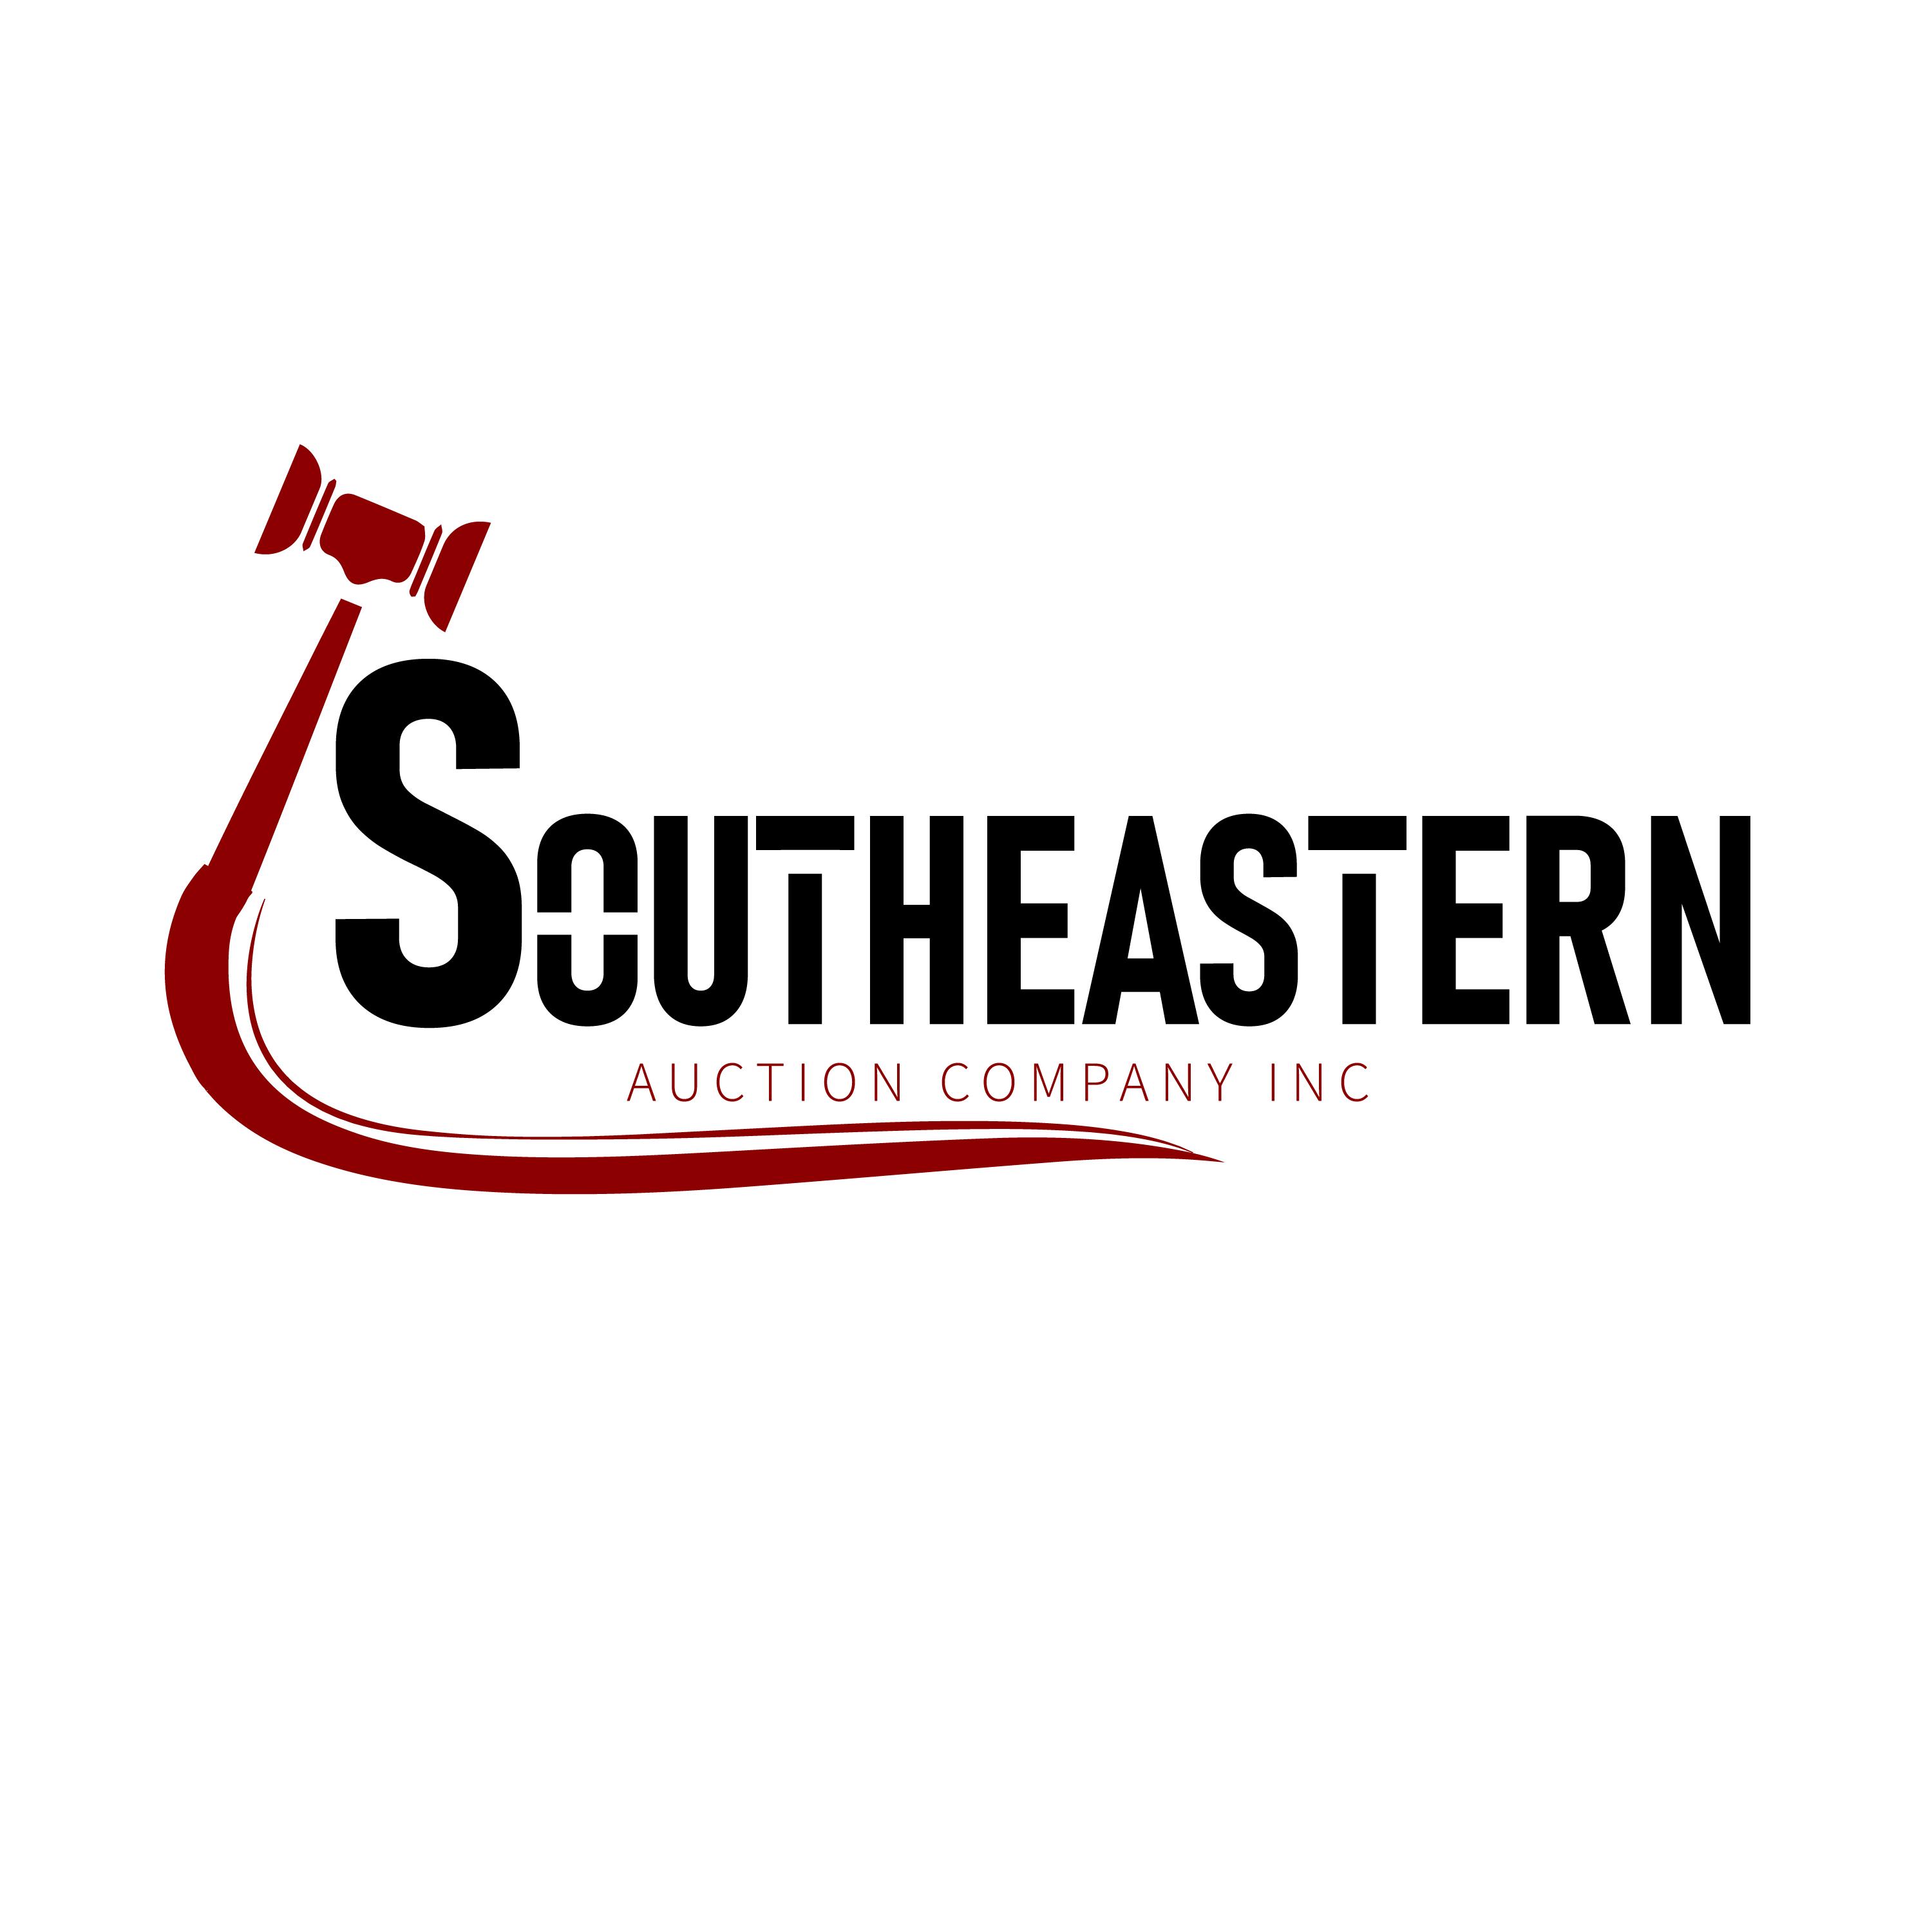 Southeastern Auction Company